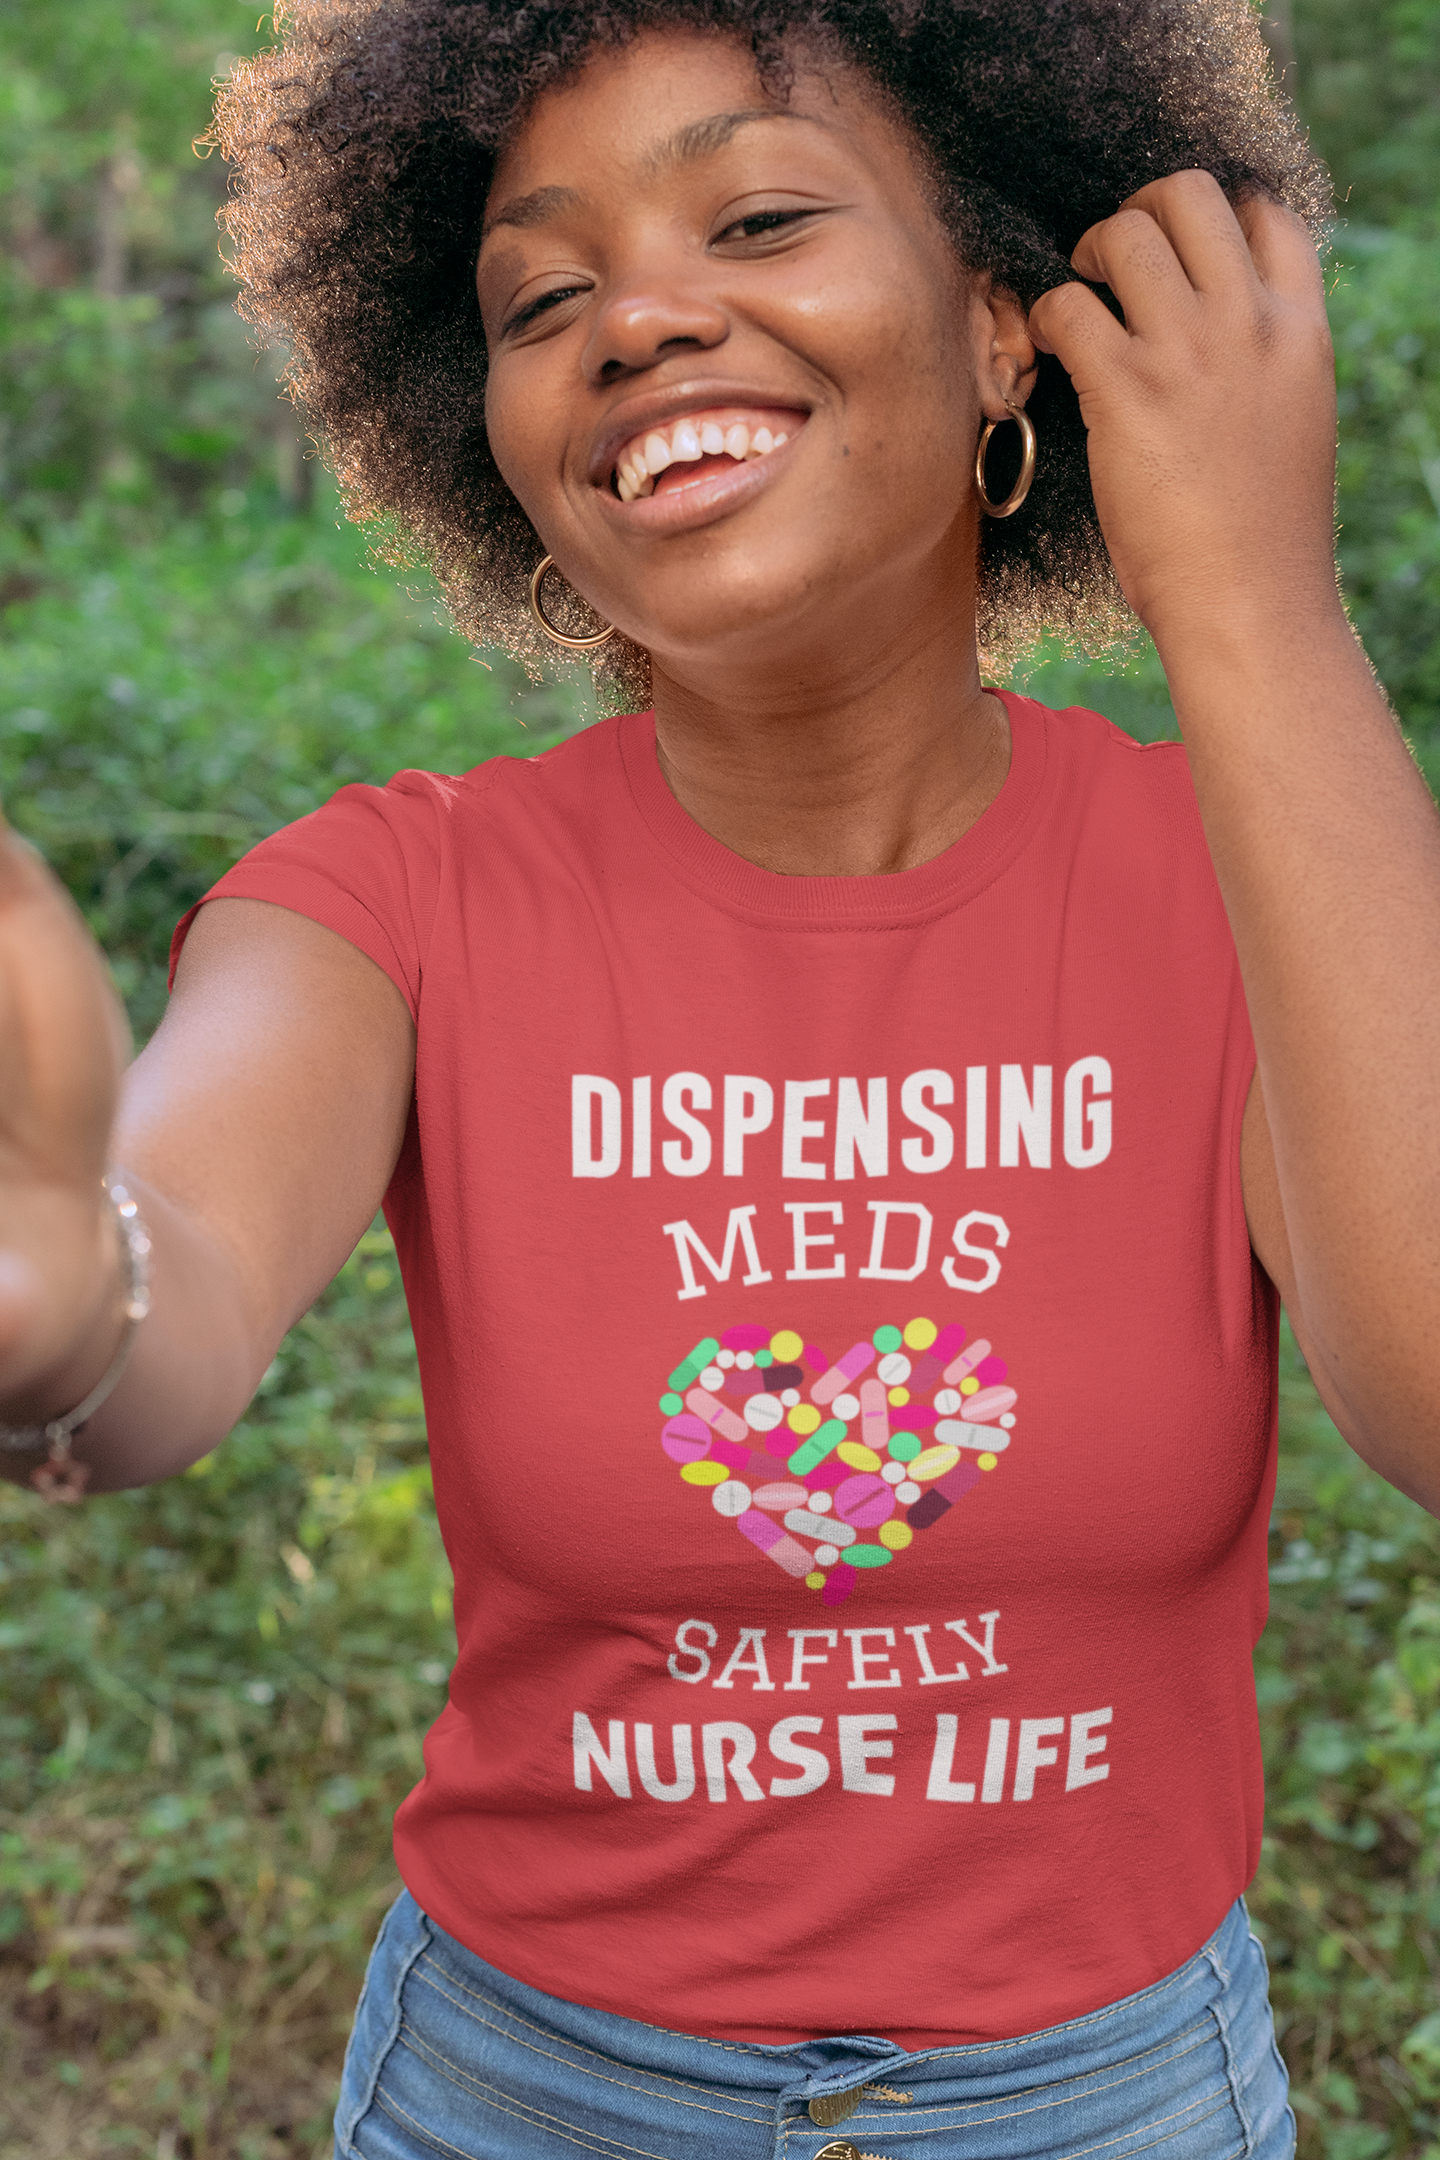 Dispensing Meds Safely Nurse Life, Nursing Dress, Nurse Gift, Nurse Shirt, Nurse Graphic, Doctor Gift, Med Student Gift, Stethoscope Charm